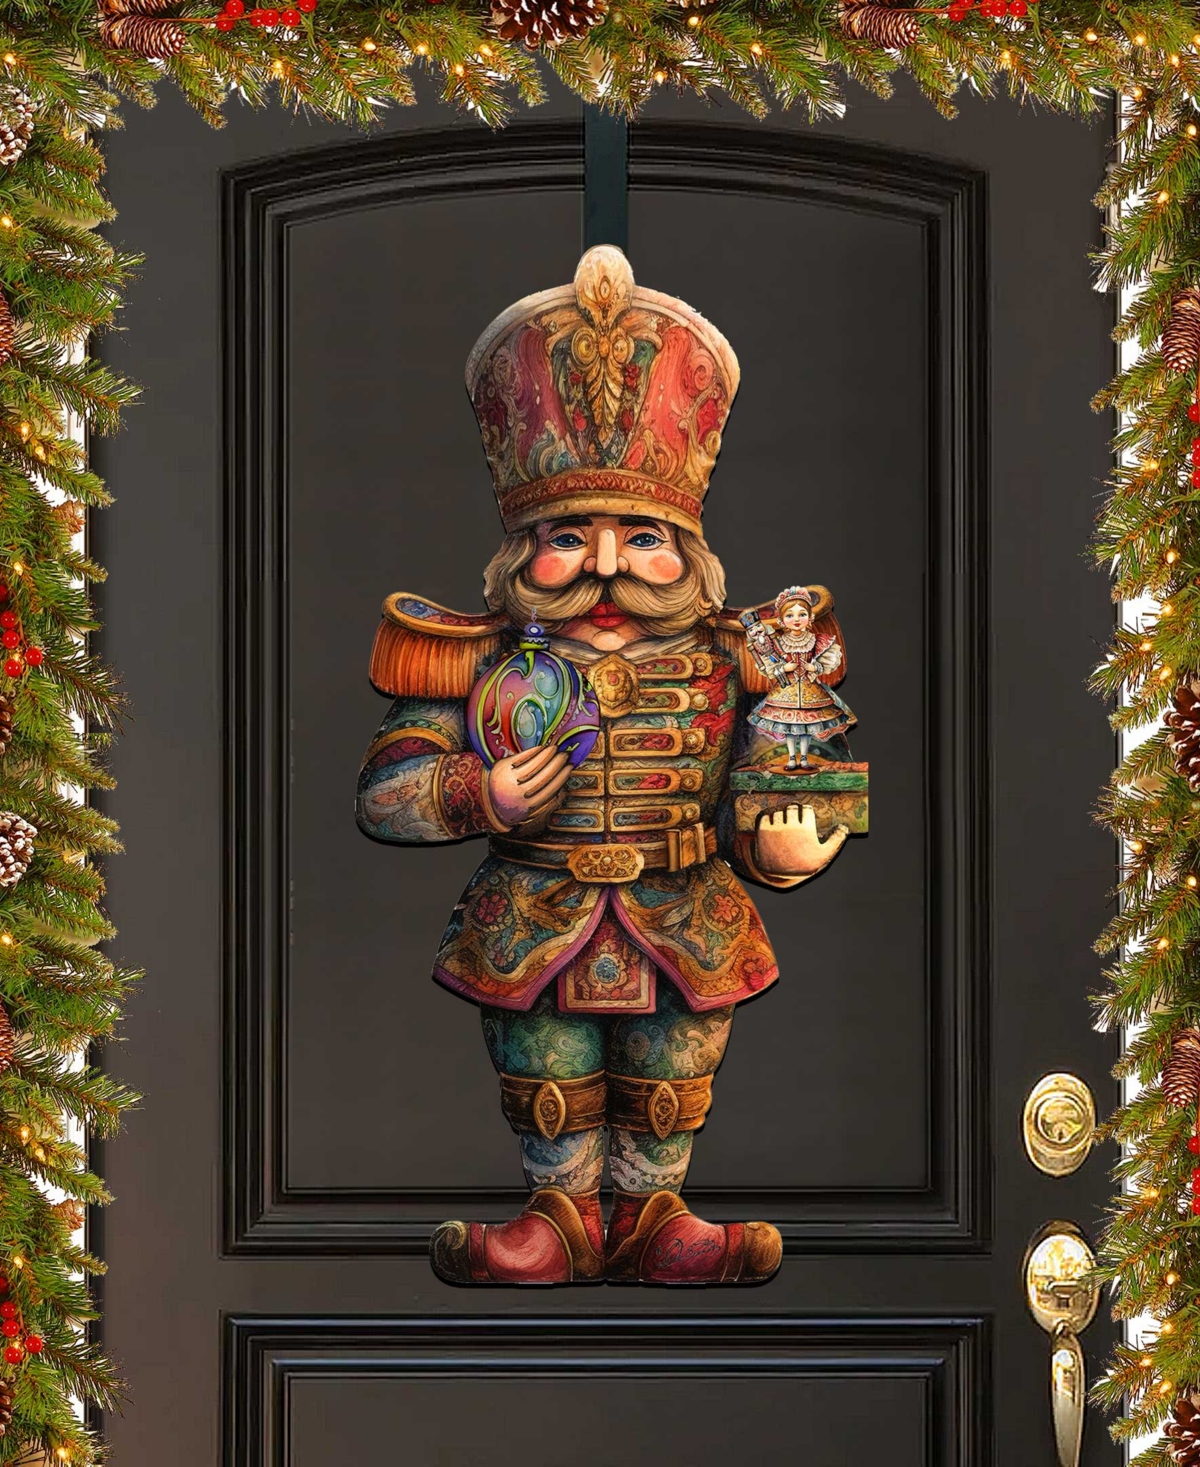 Clara and Nutcracker Prince Christmas Door Hanger Wooden Door Decor G. DeBrekht - Multi Color